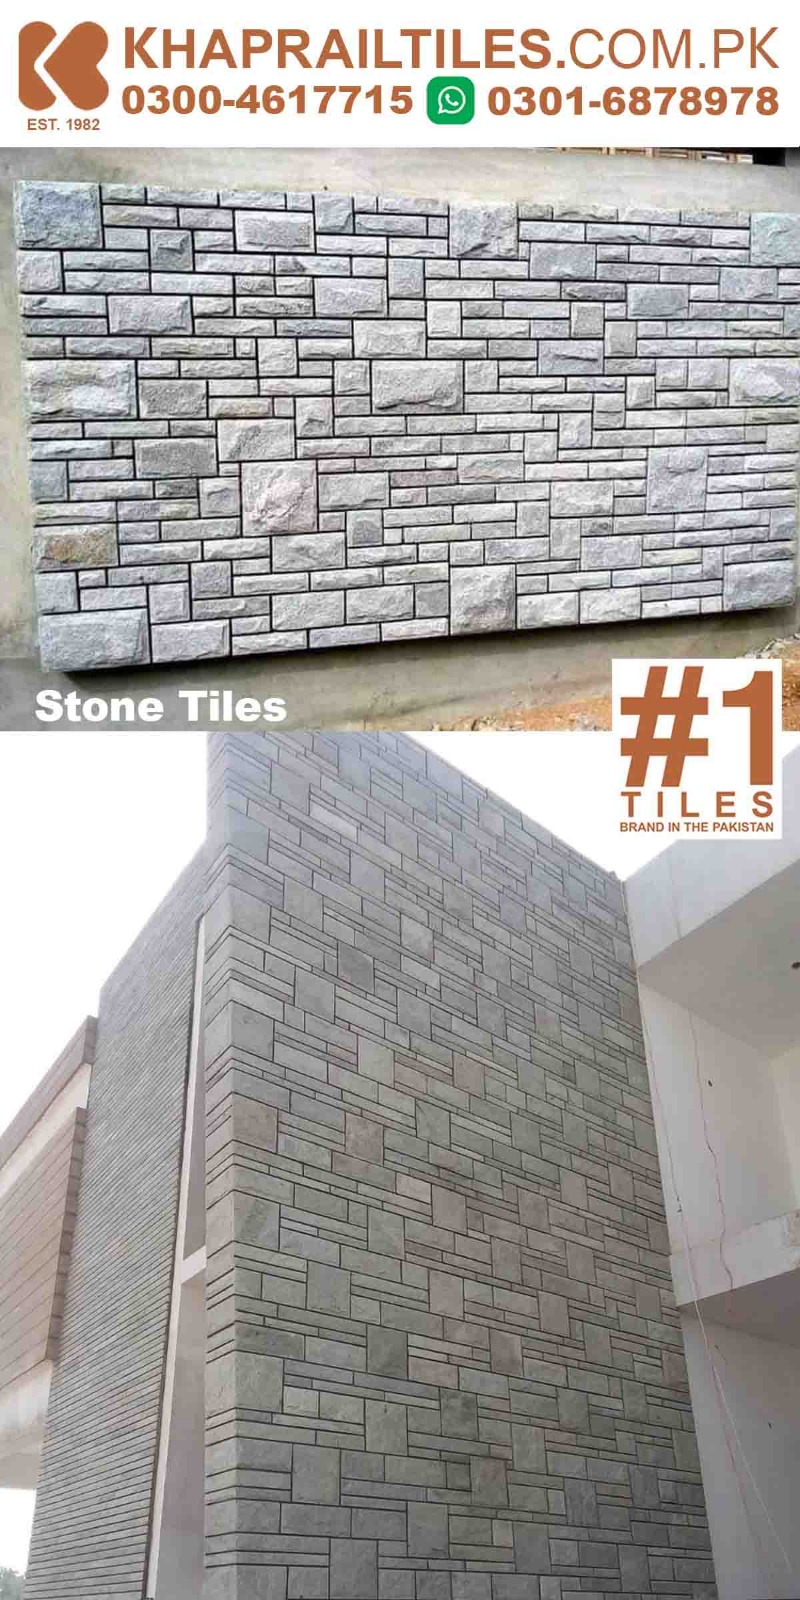 98 Grey colour natural stone split face tiles design for outdoor walls